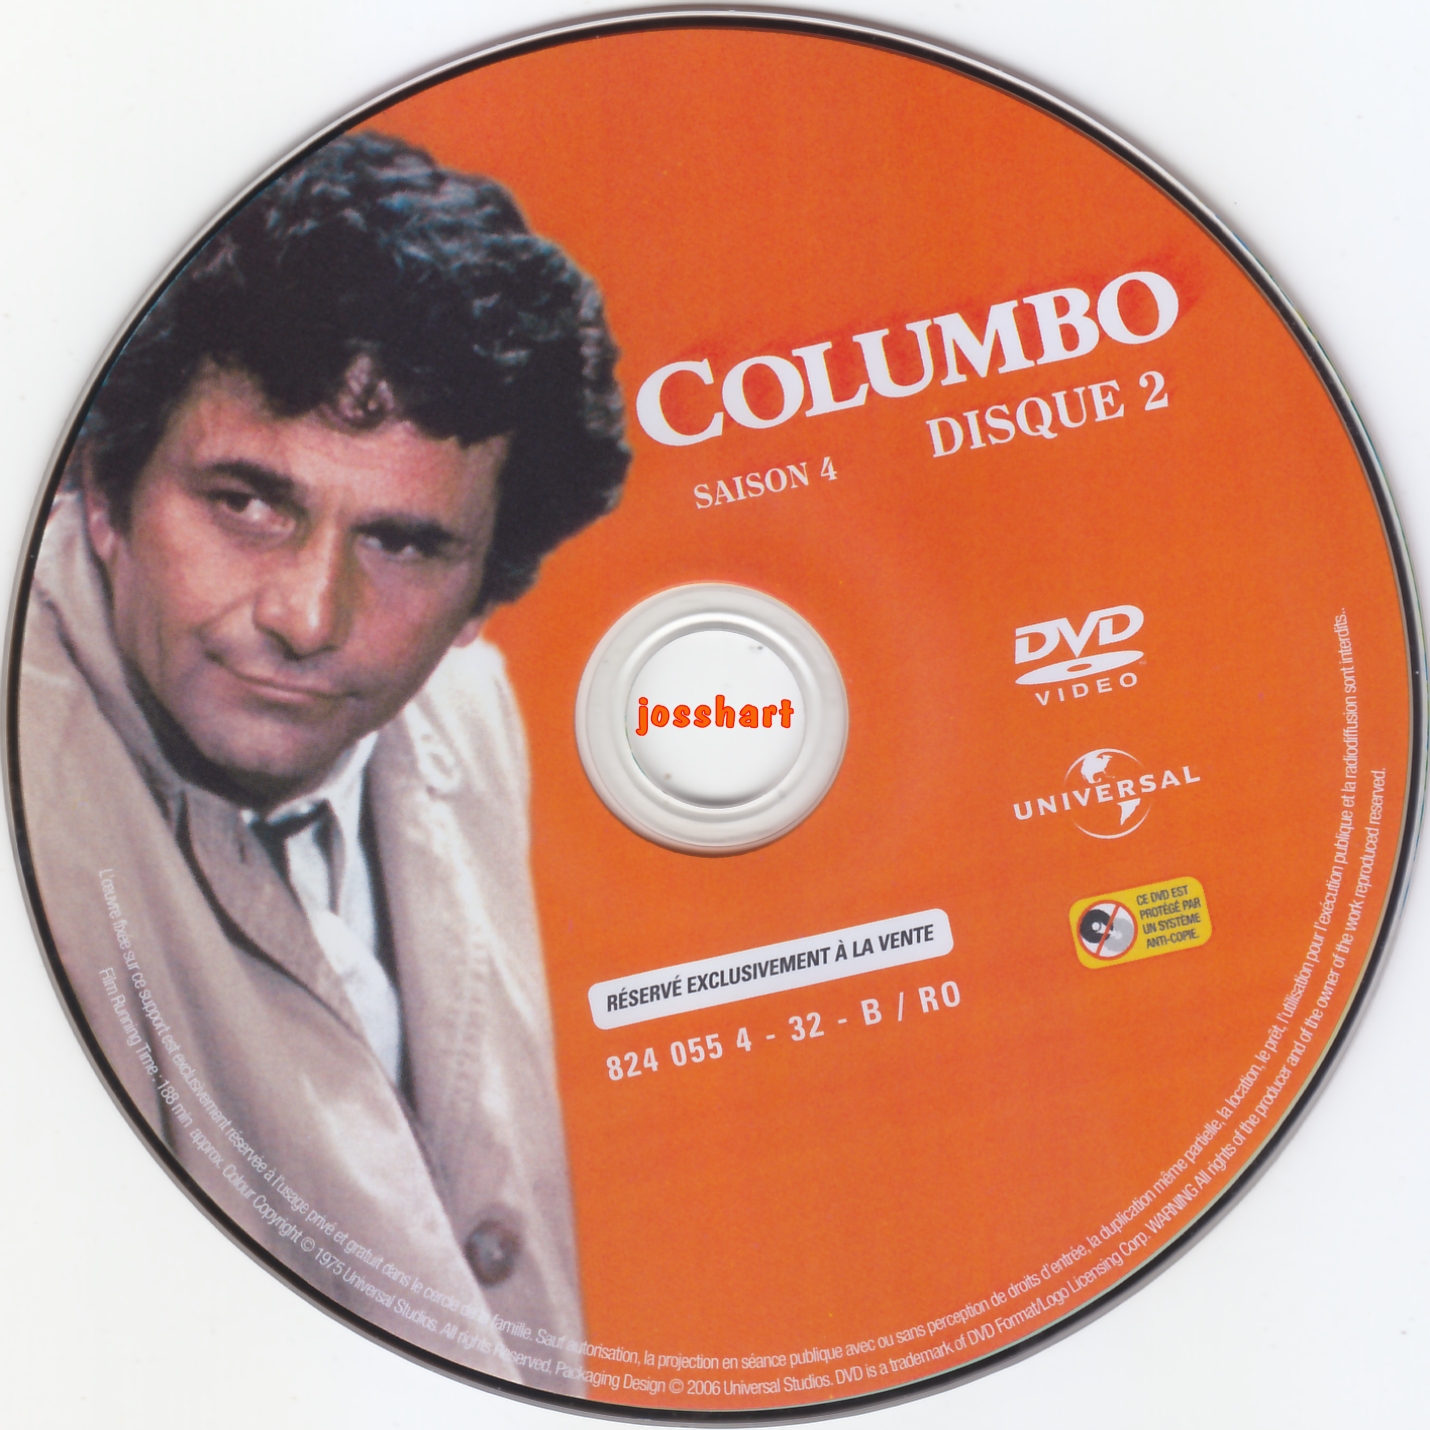 Columbo S4 DISC2